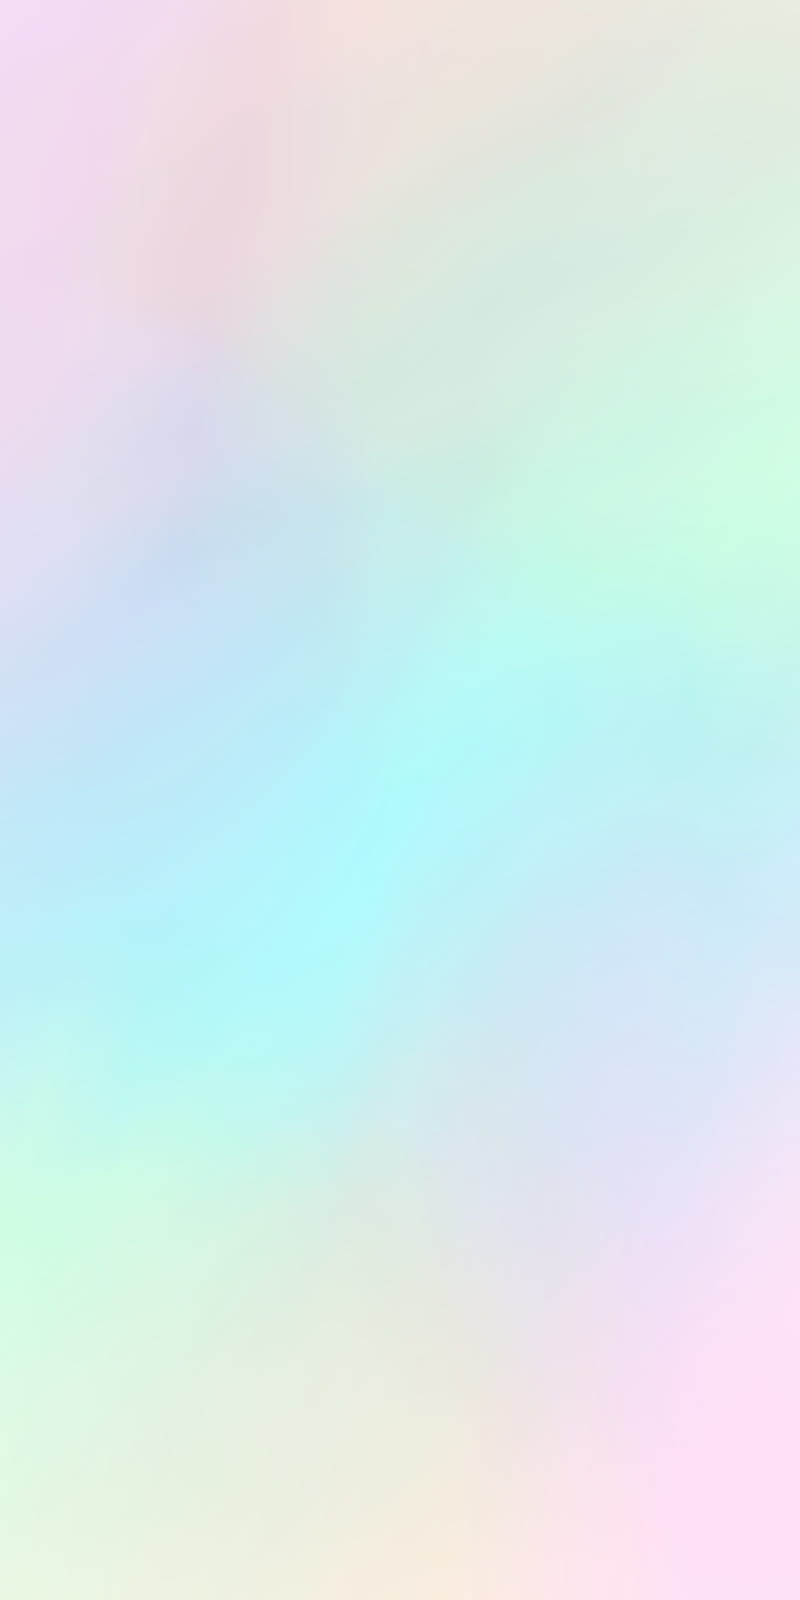 textura de fondo ombre rosa pastel y amarillo acuarela pintada a mano  telón de fondo degradado aquarelle manchas en papel papel tapiz de  pintura artística 12313484 Foto de stock en Vecteezy